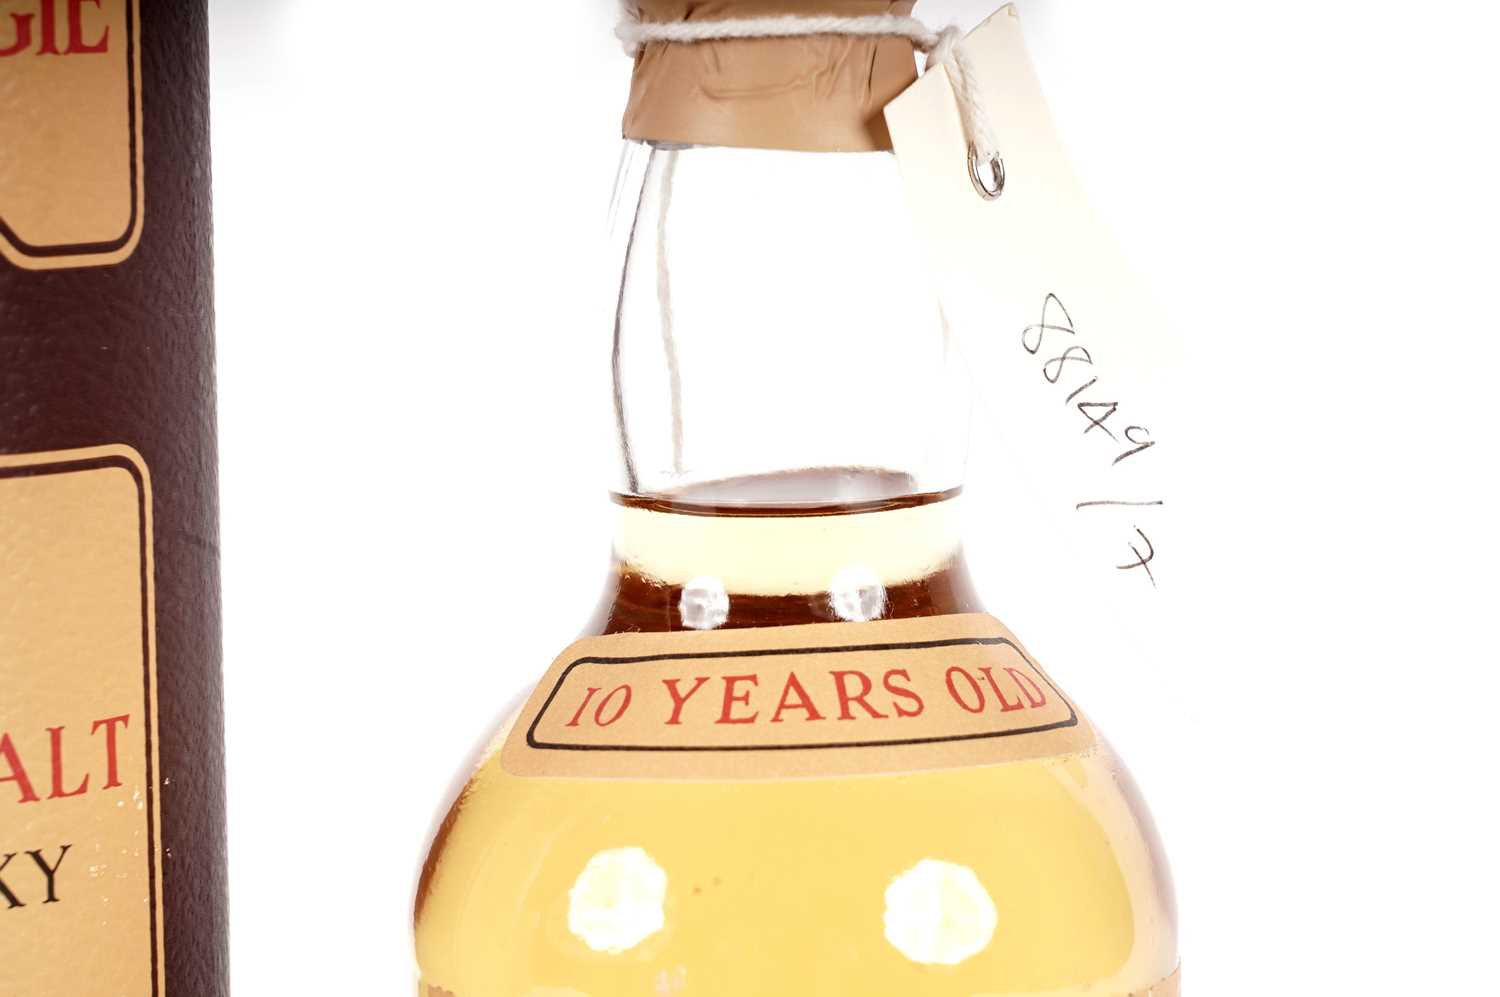 A bottle of Glenmorangie Single Highland Malt Scotch Whisky - Image 3 of 4